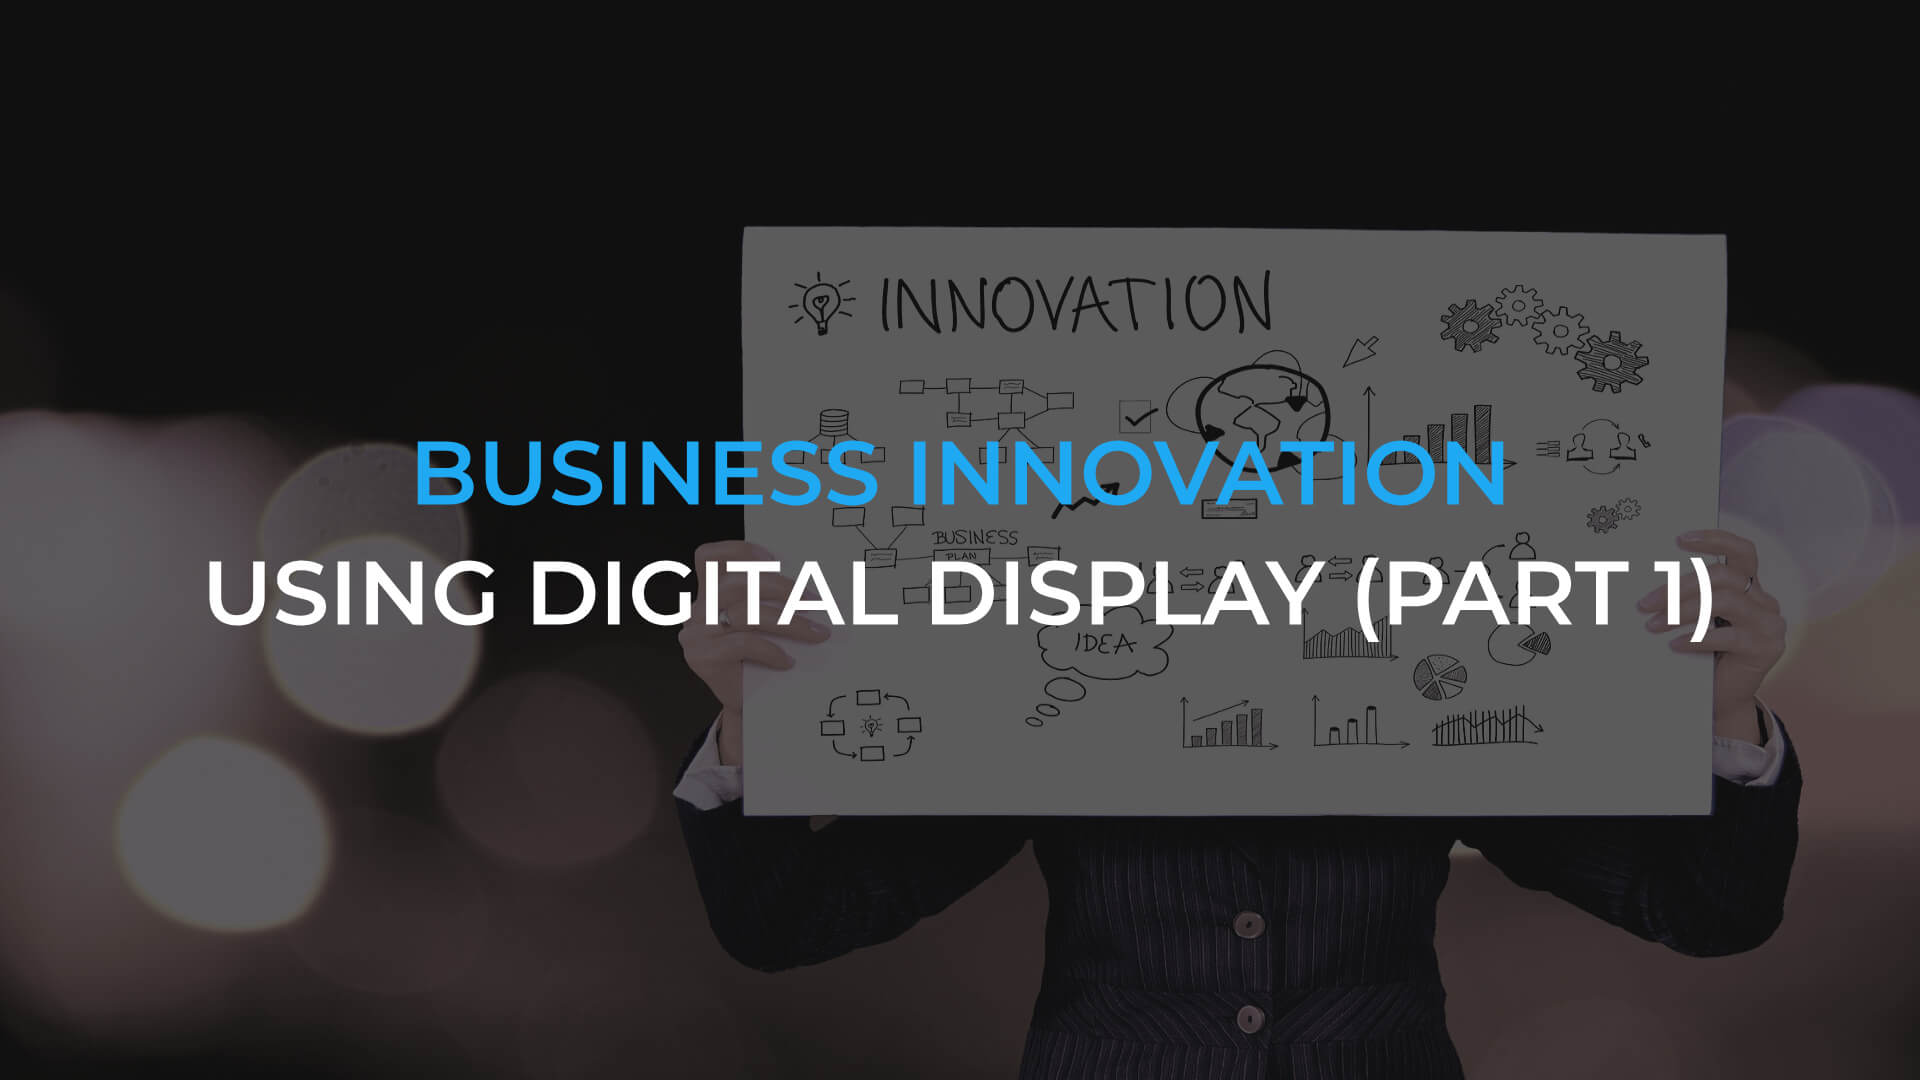 Business innovation using digital signage (Part 1)